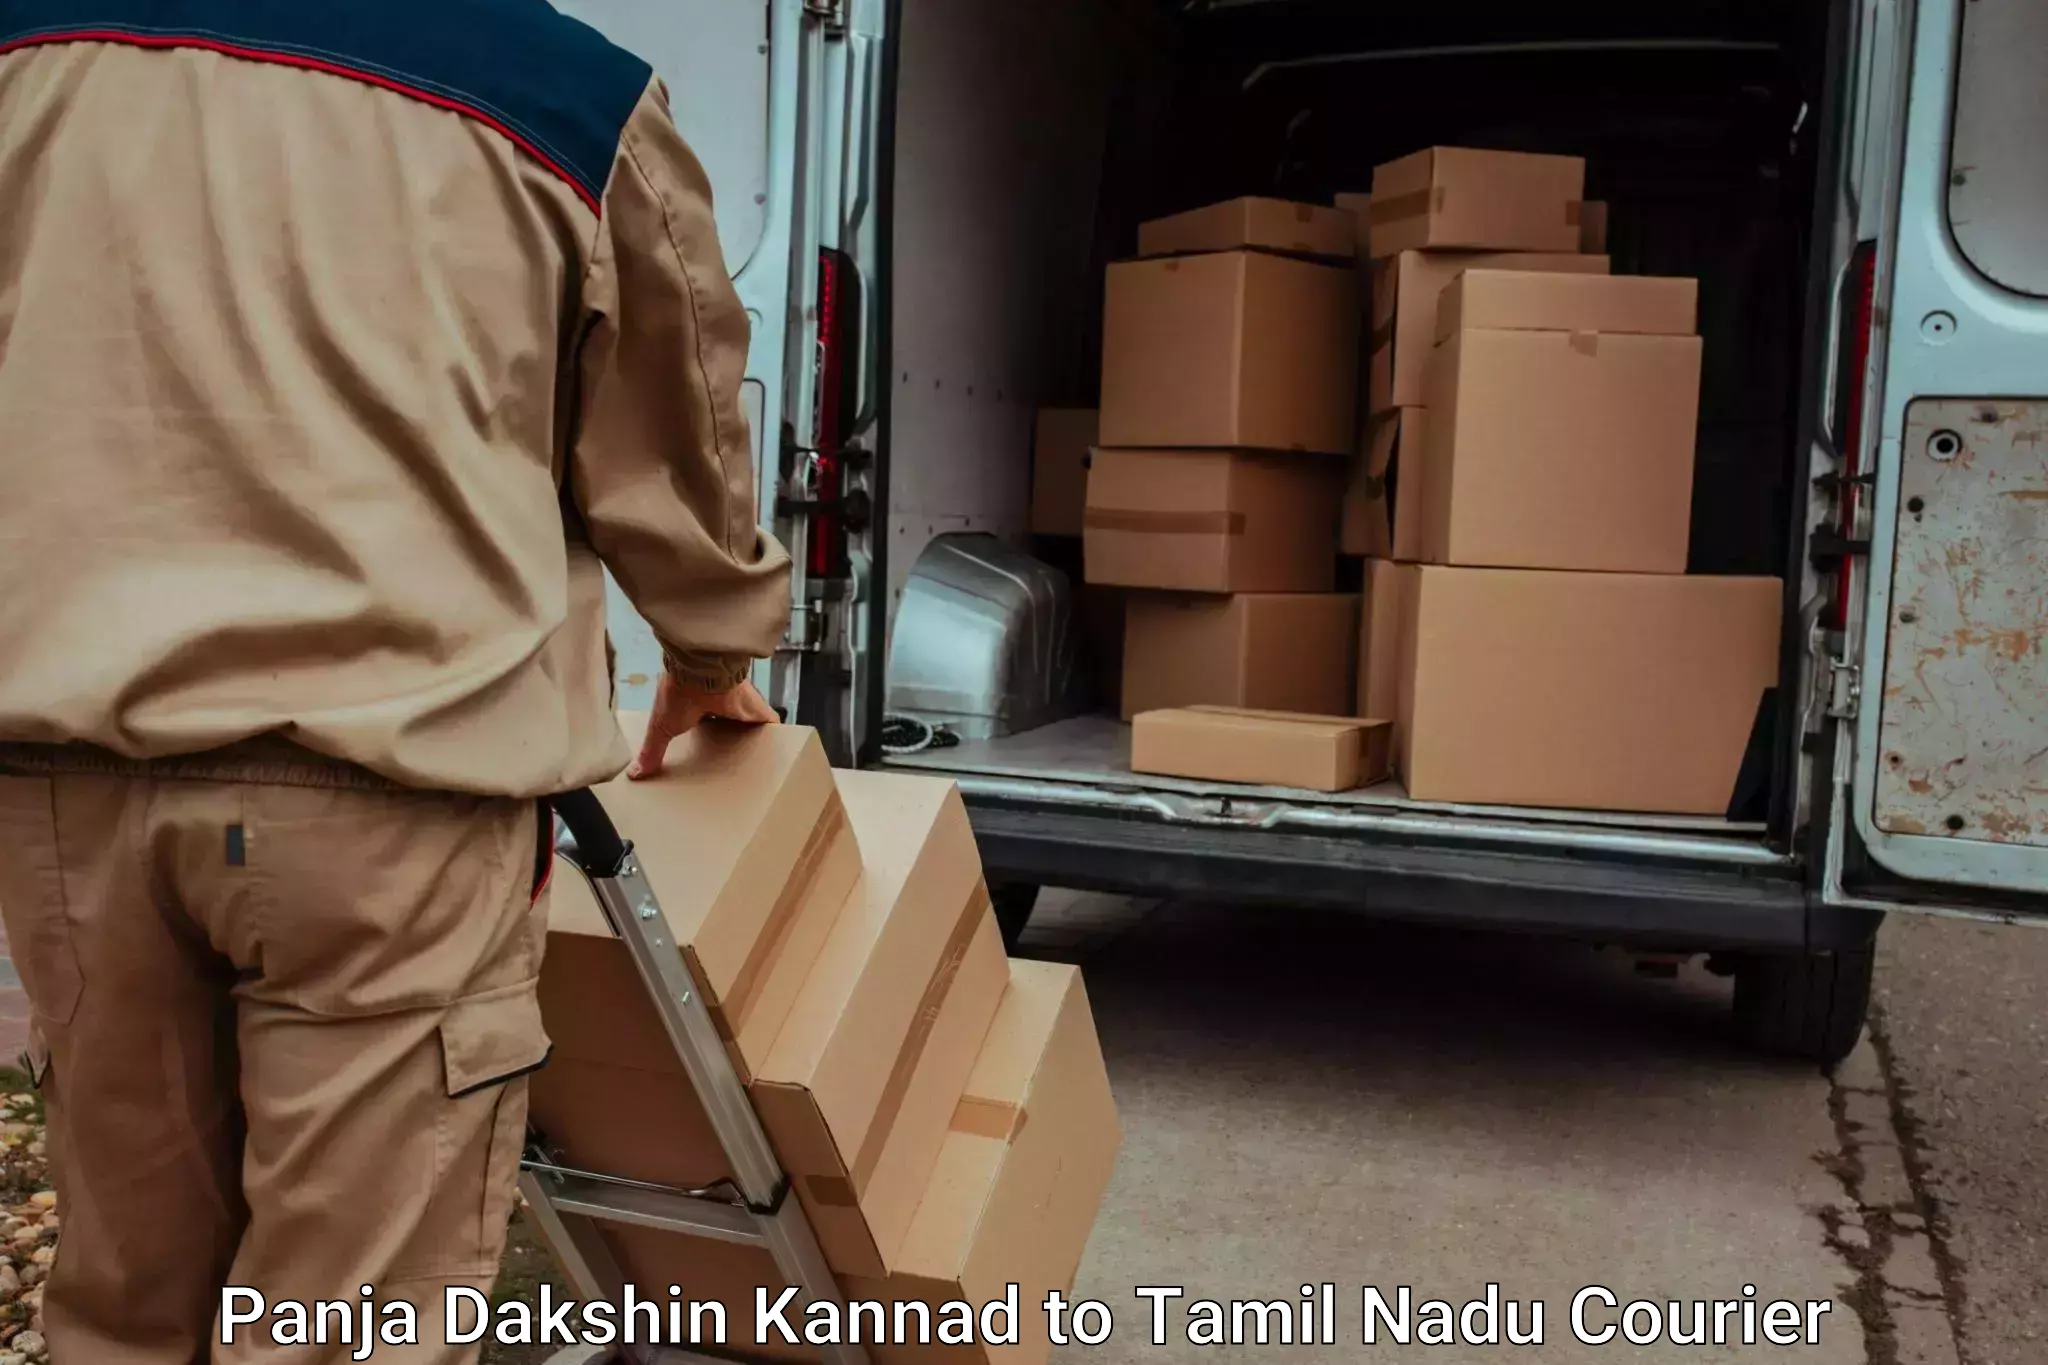 Professional moving company Panja Dakshin Kannad to Perambalur